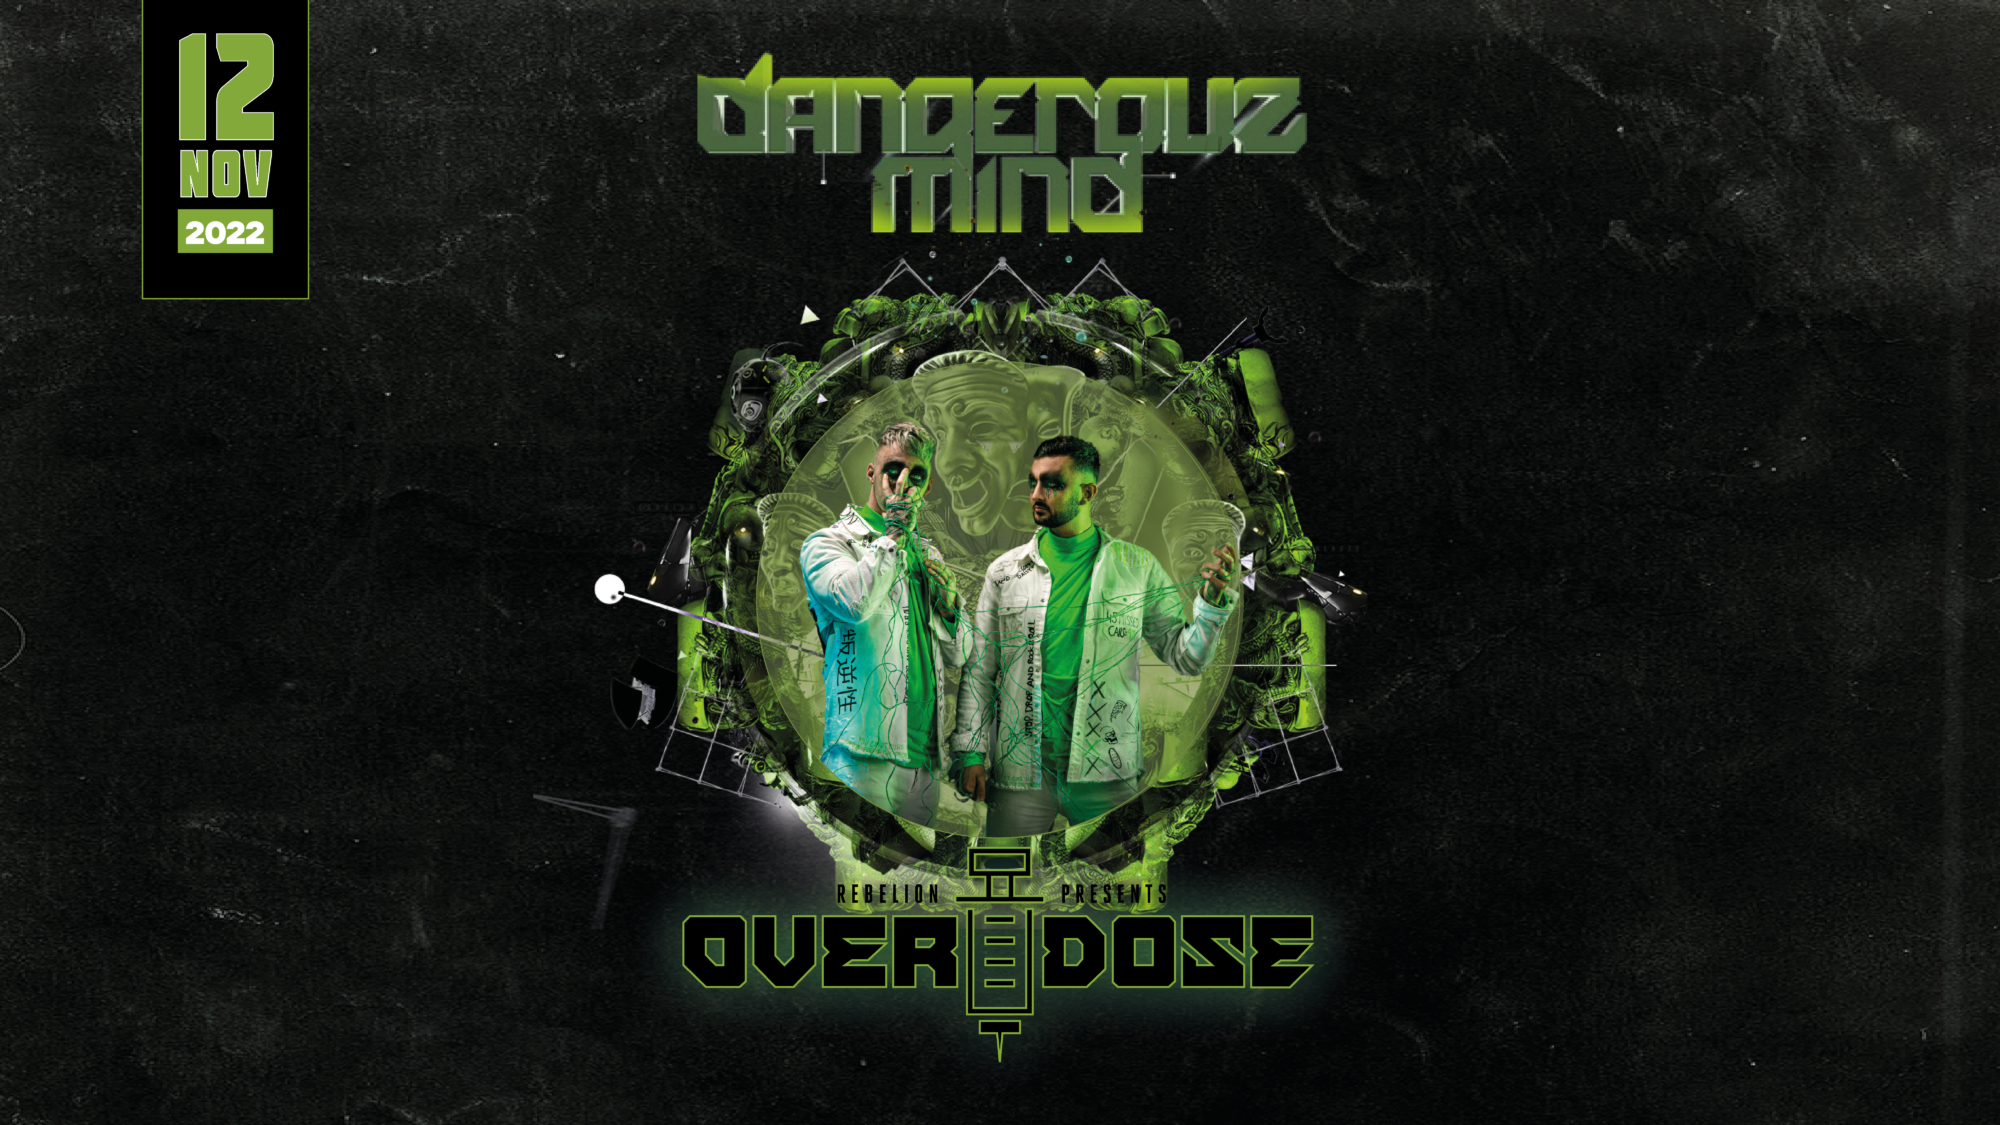 2022-11-12 Dangerouzmind Rebelion Presents Overdose